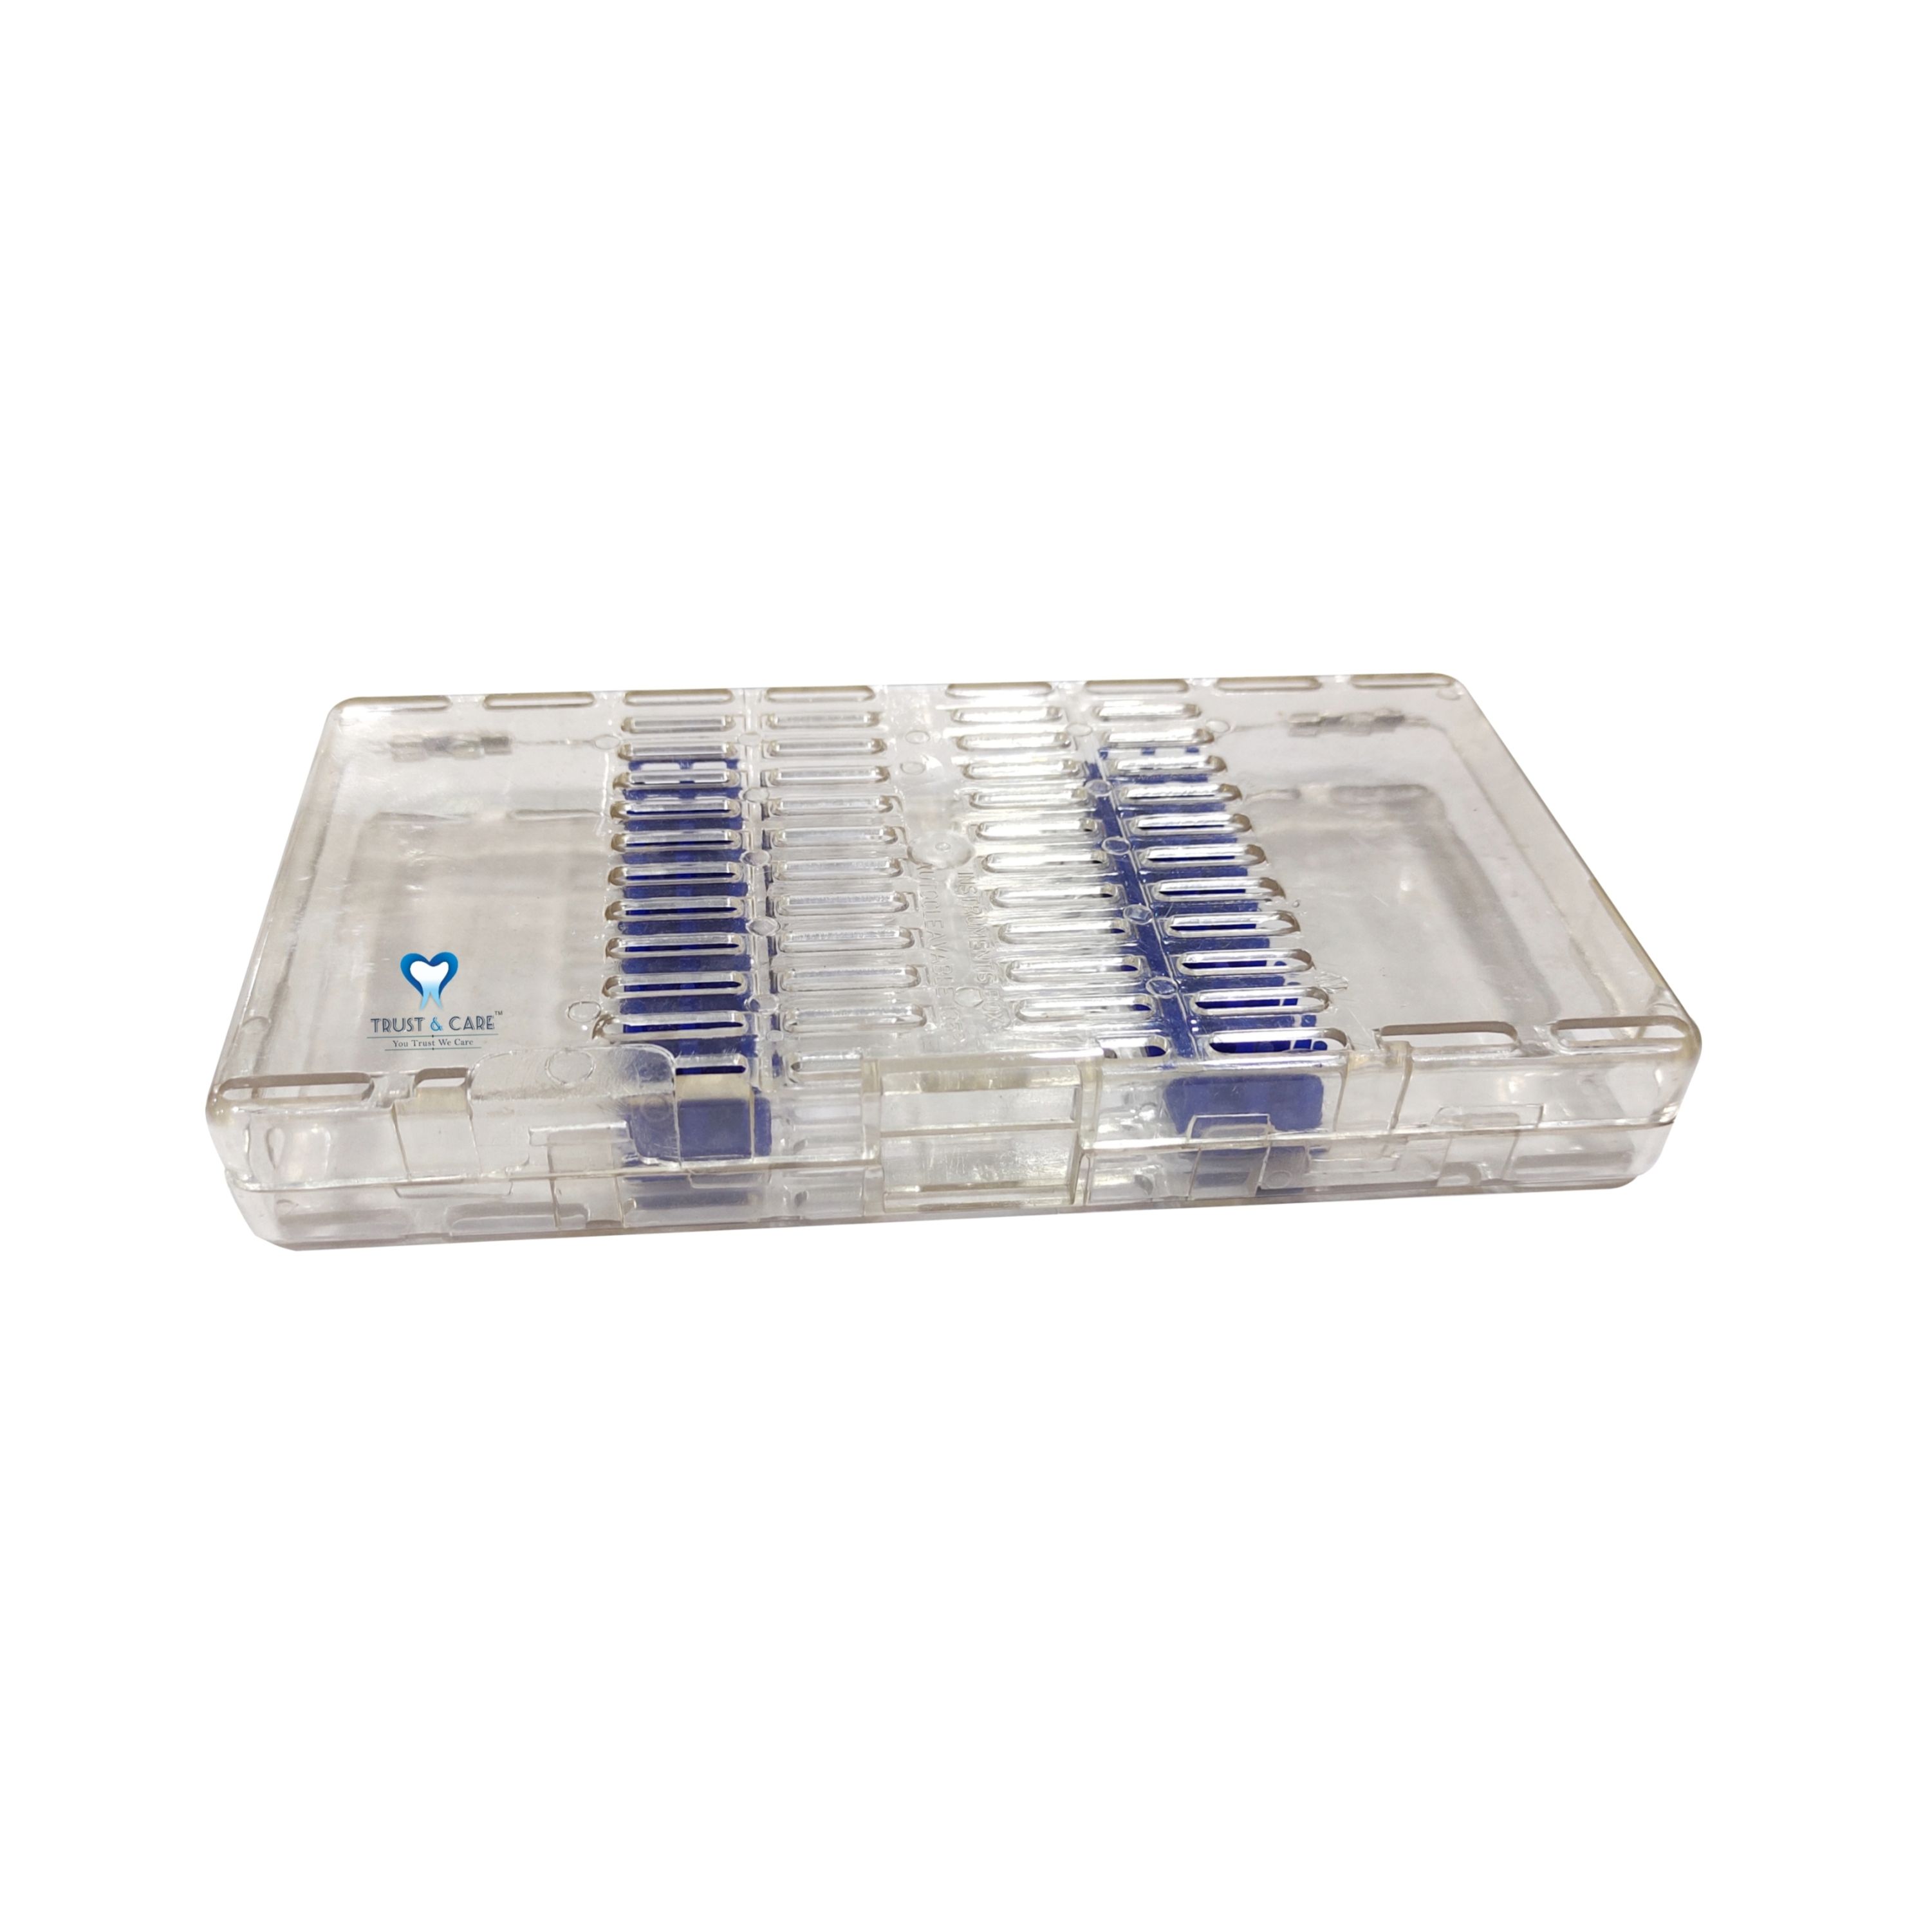 Trust & Care Plastic Instrument Sterilization Cassette For 10-Inst.